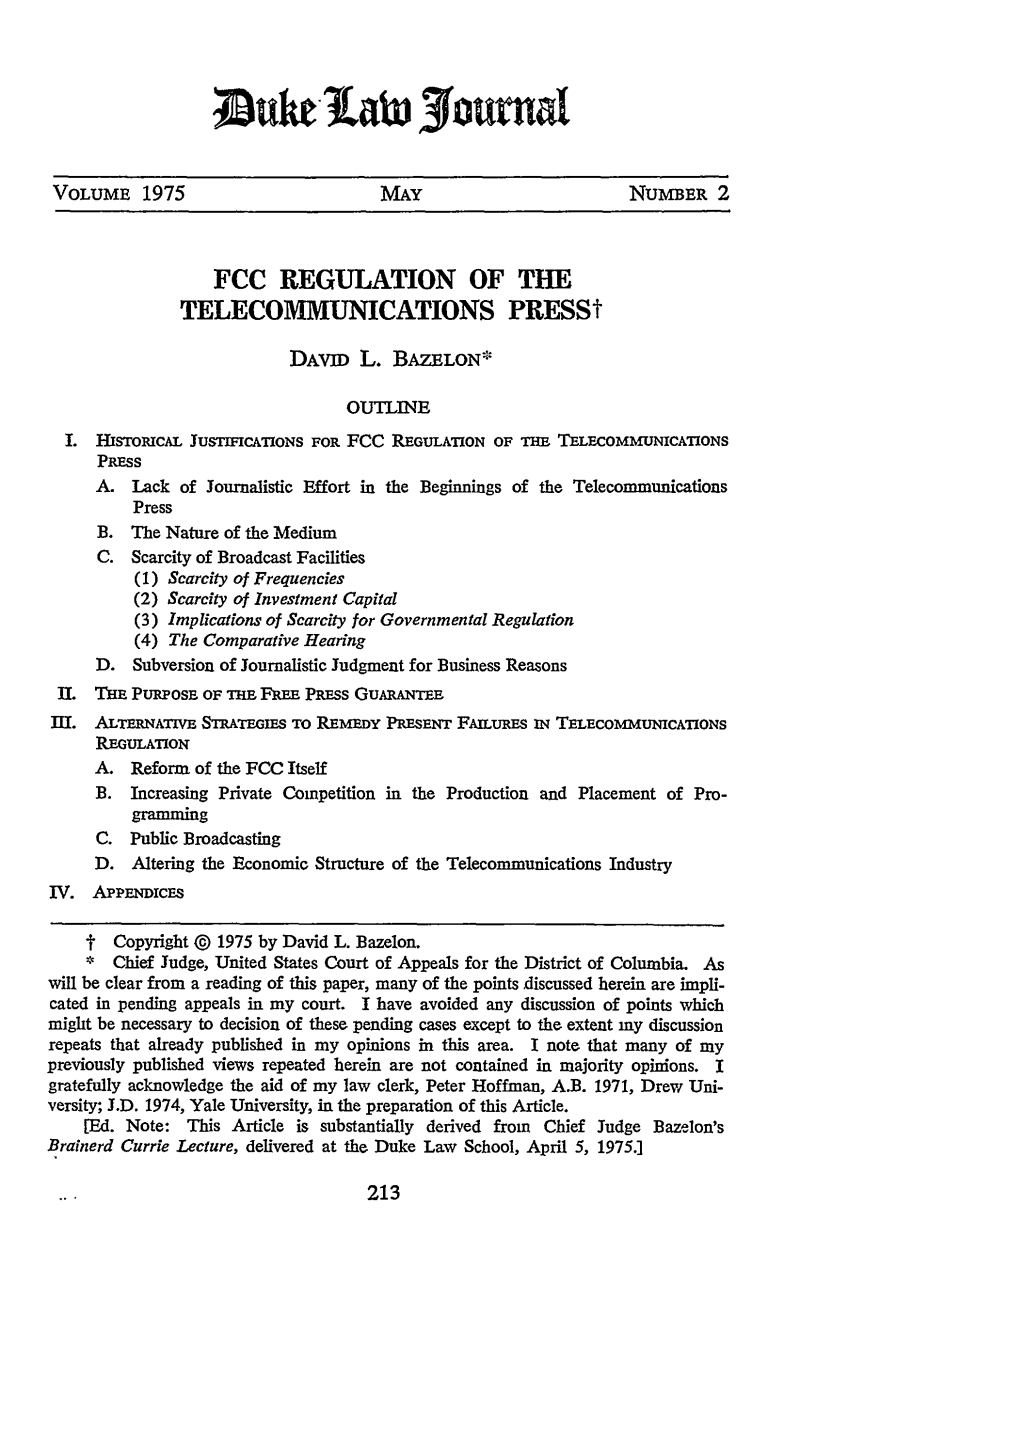 FCC REGULATION of the TELECOMMUNICATIONS Presst